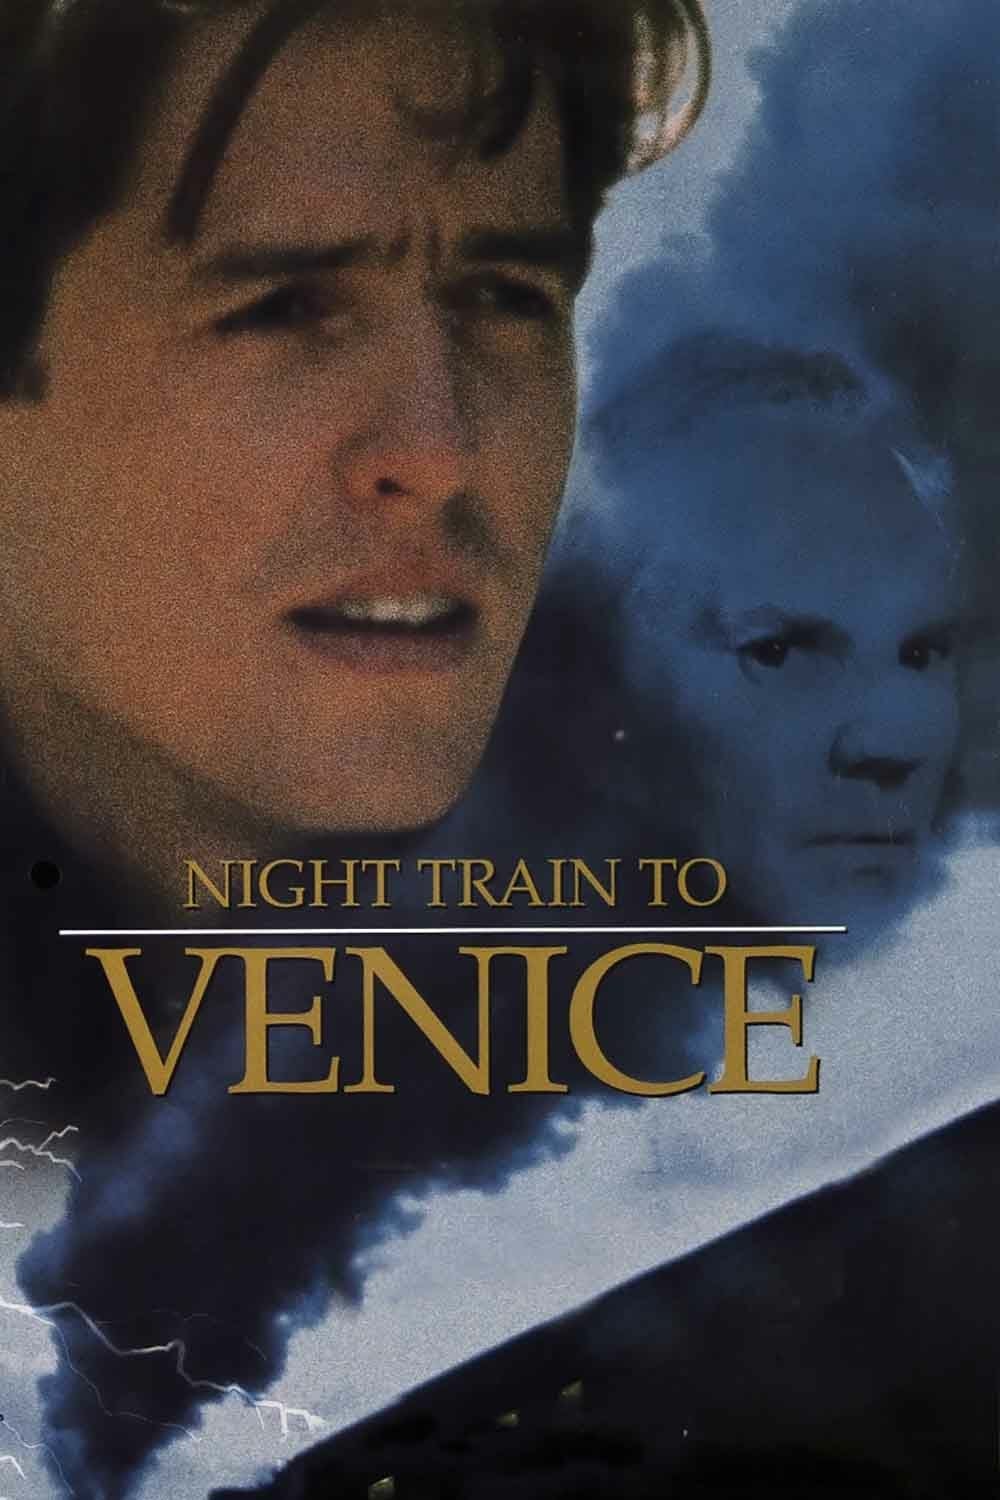 Plakat von "Night Train to Venice"